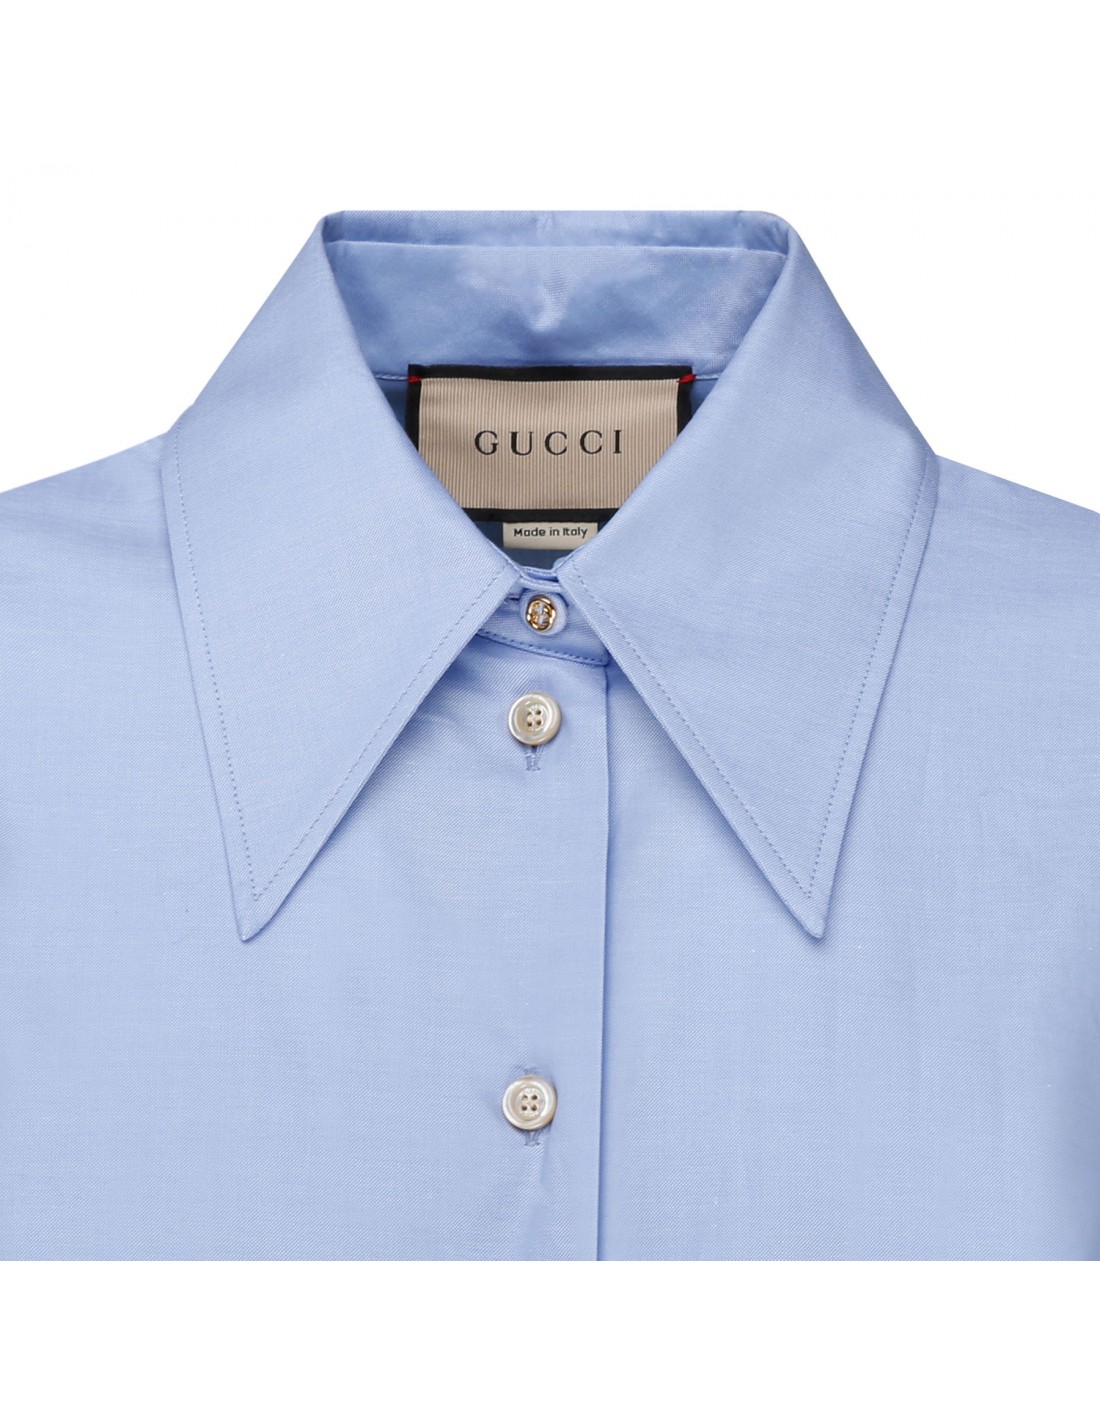 Blue cotton Oxford shirt